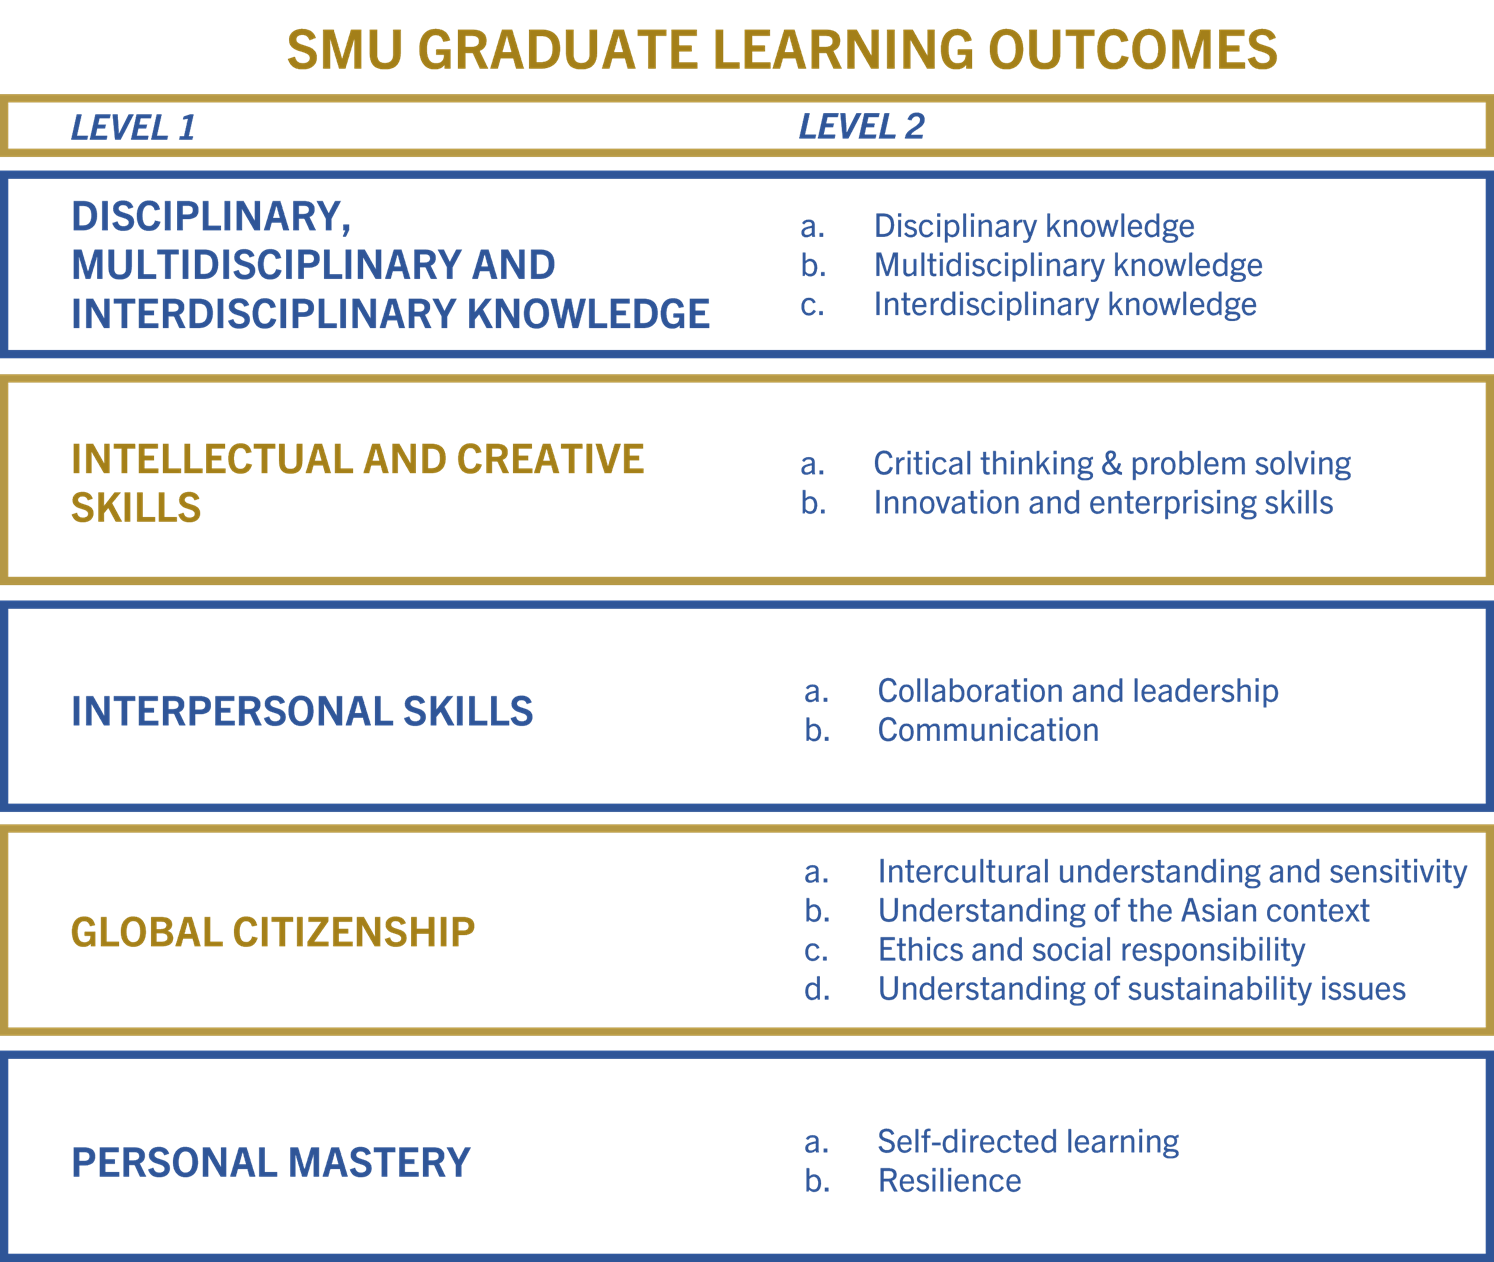 SMU Graduate Learning Outcomes table